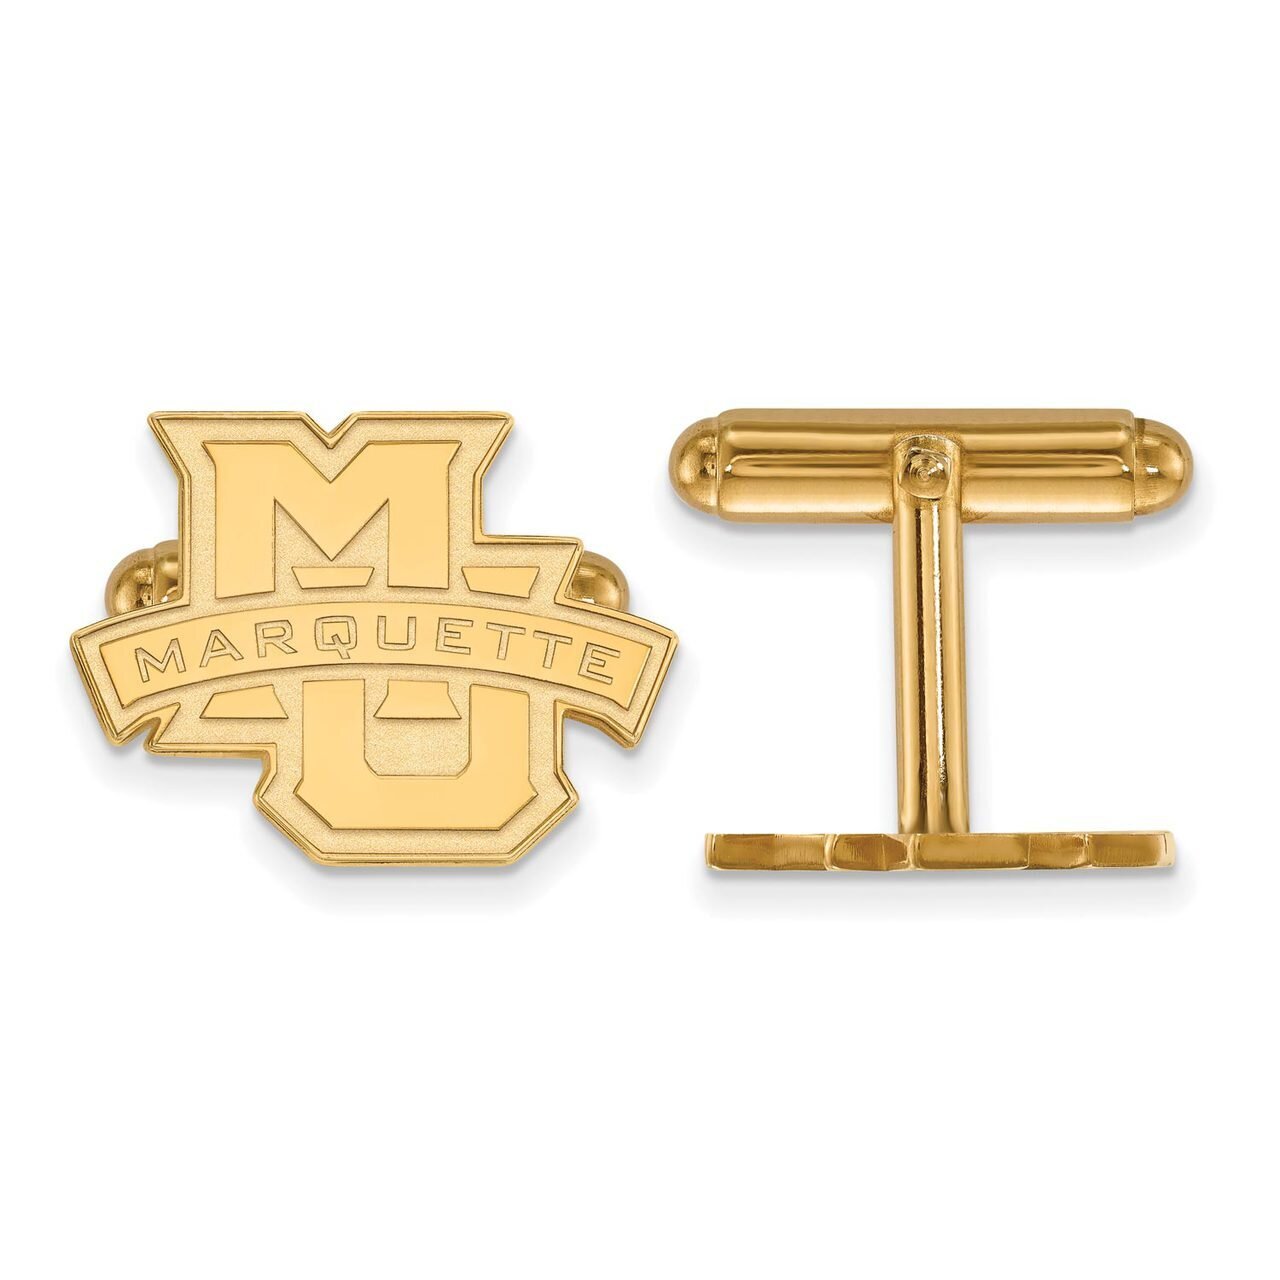 Marquette University Cufflinkss Gold-plated Silver GP029MAR